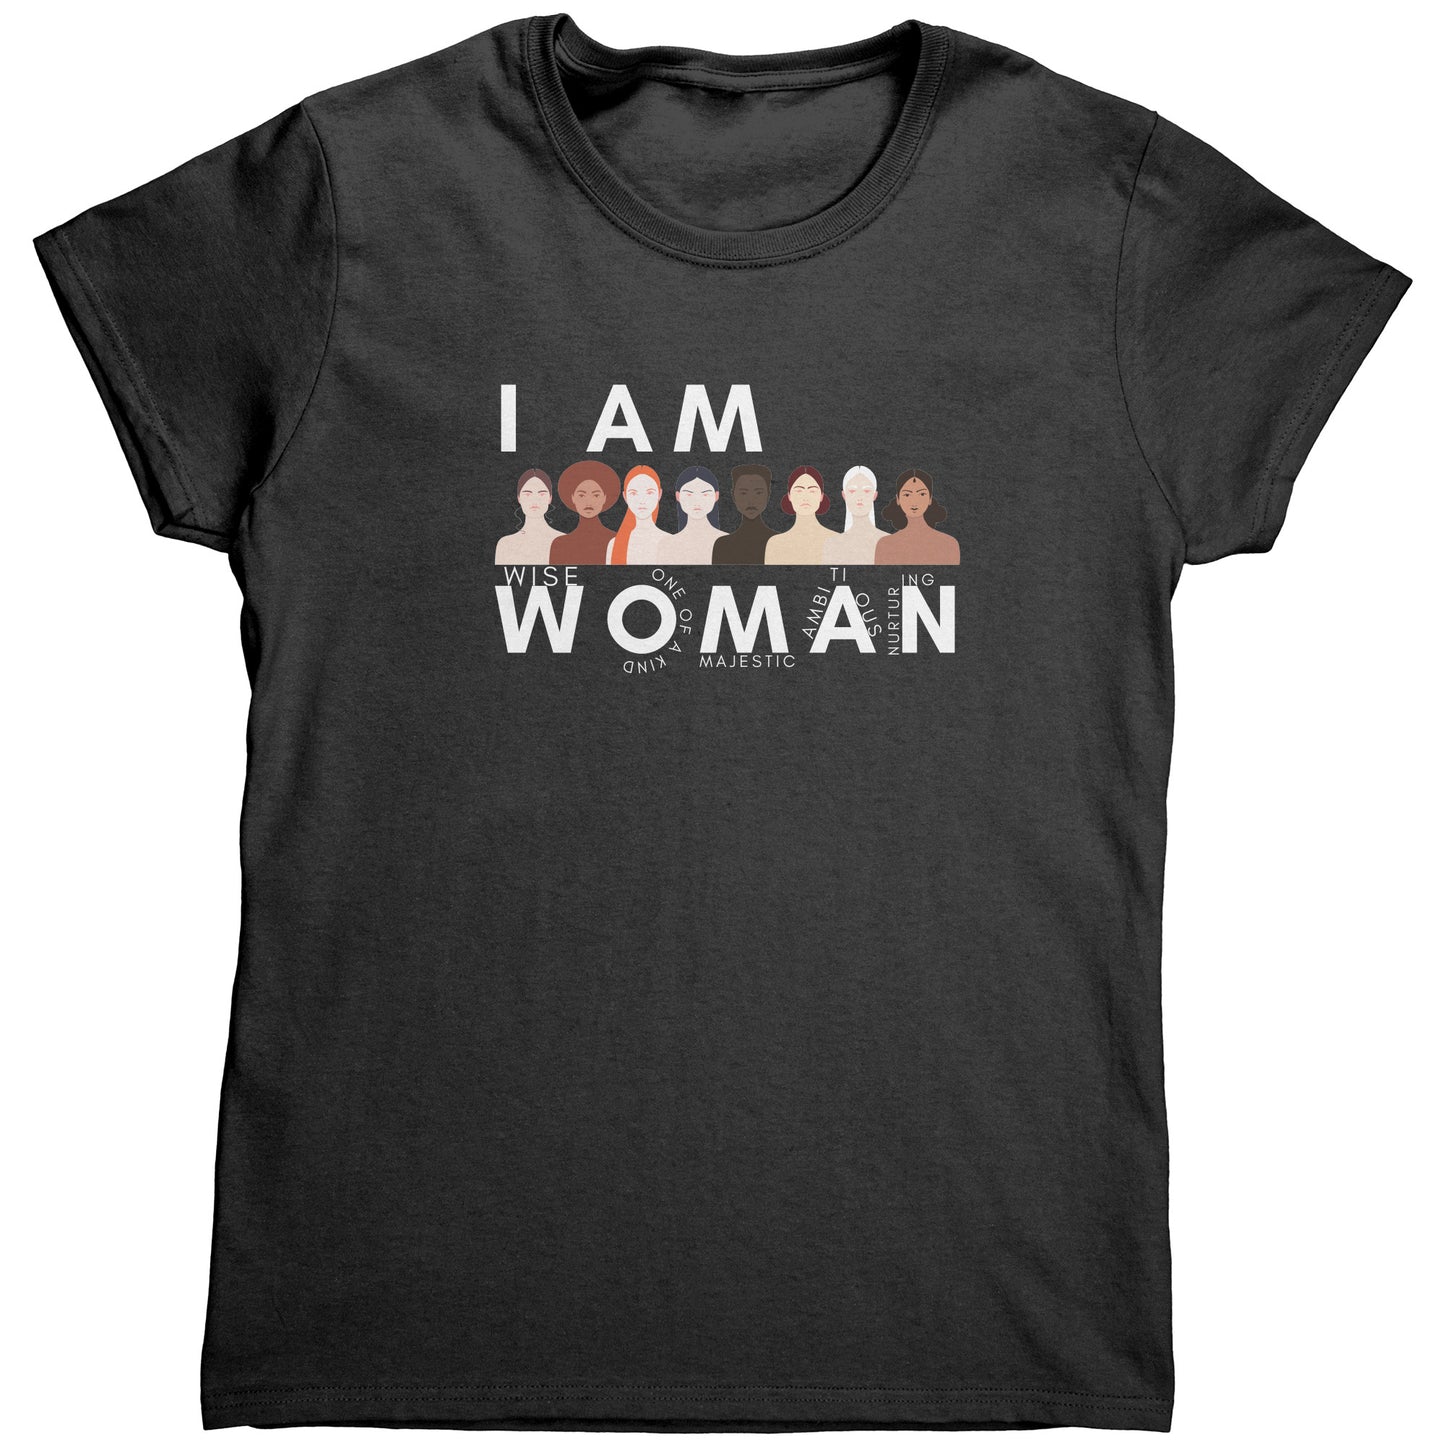 I AM WOMAN Gildan Women's Shirt